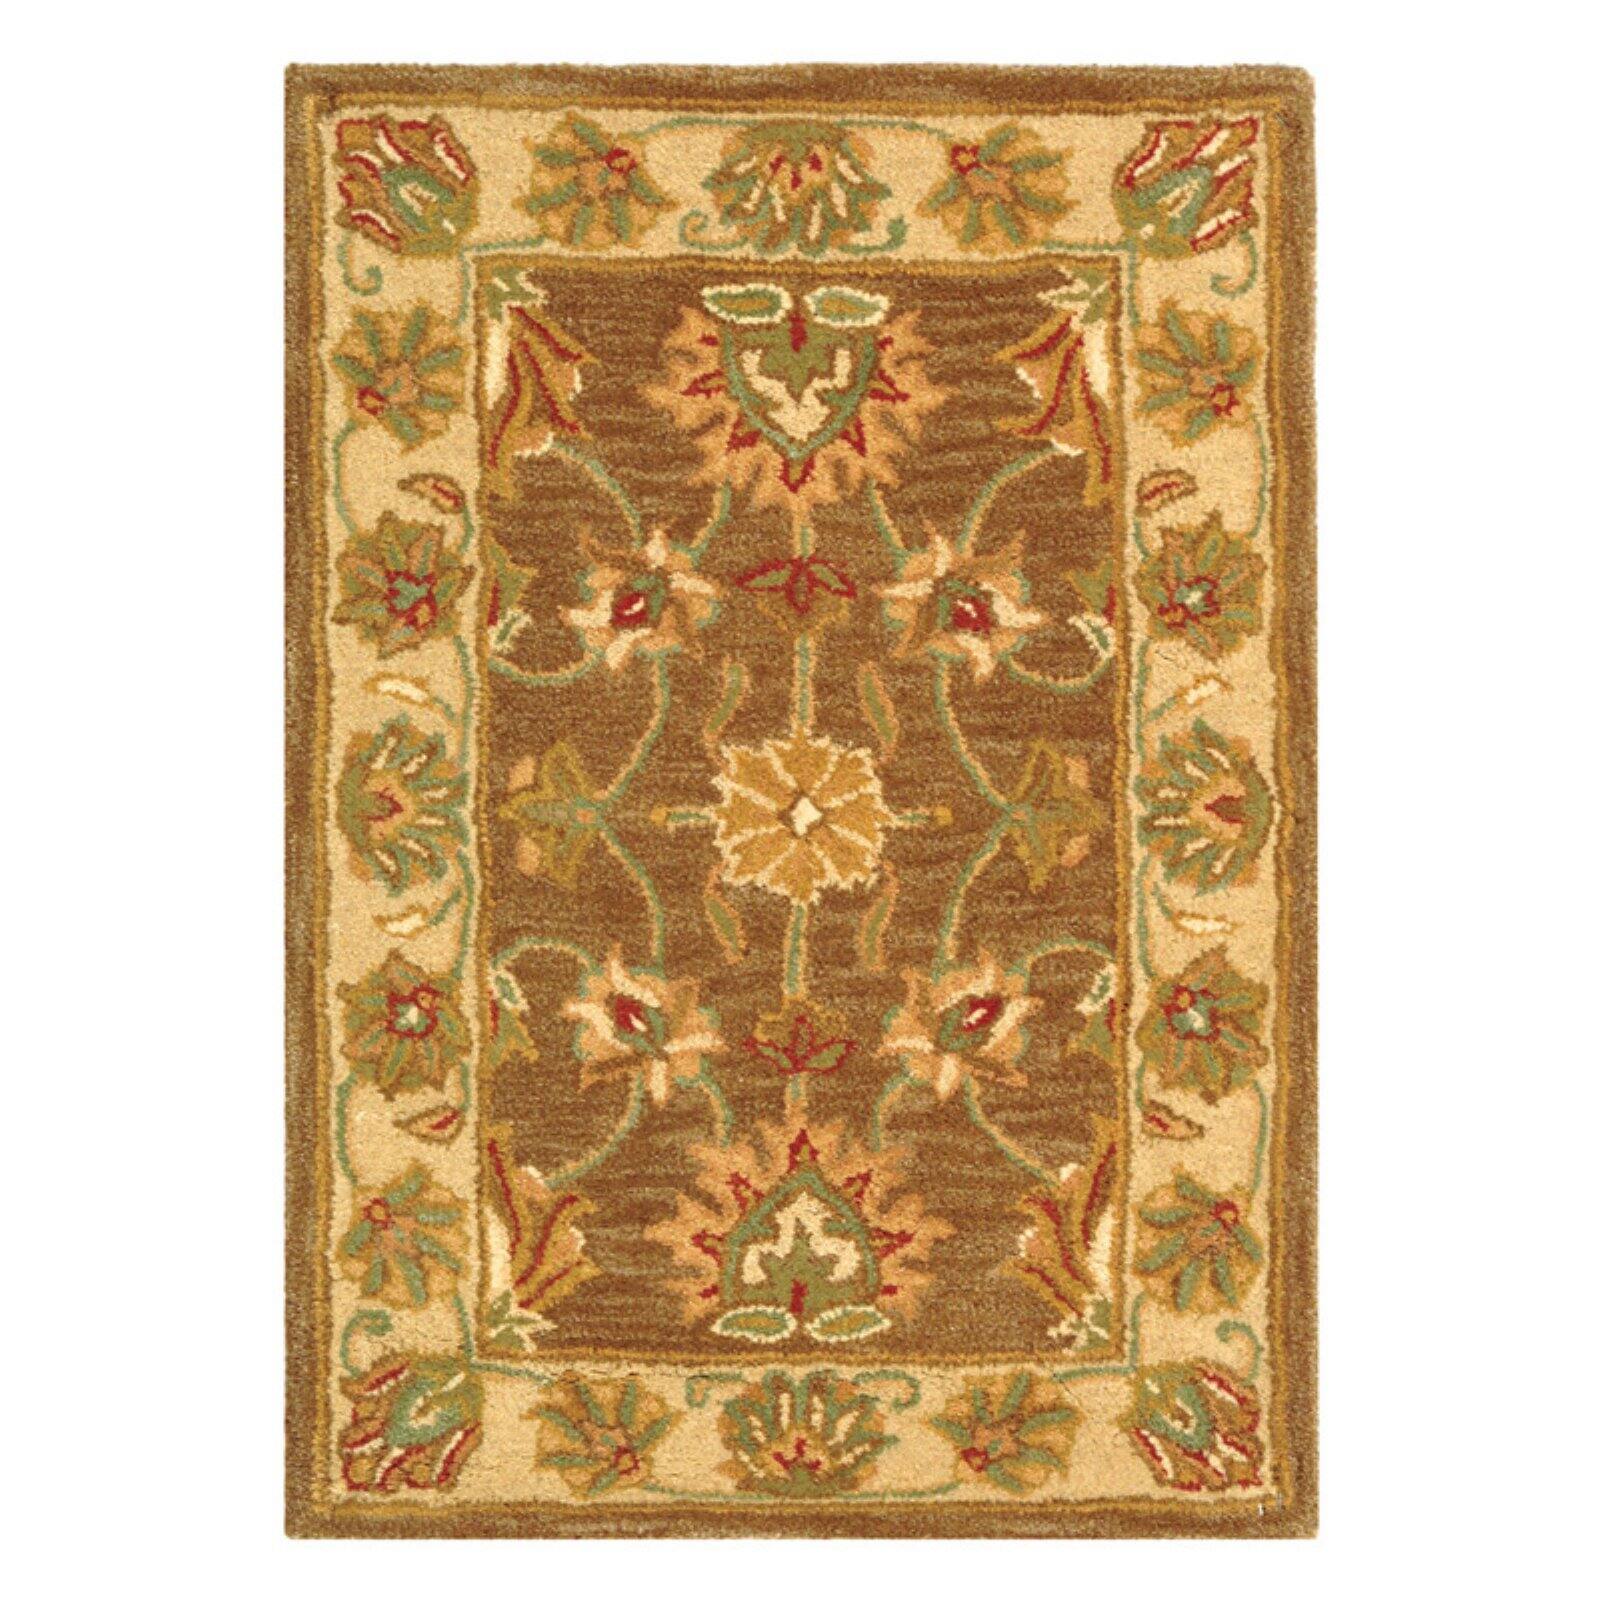 SAFAVIEH Heritage Regis Traditional Wool Area Rug, Brown/Ivory, 9'6" x 13'6" - image 1 of 9